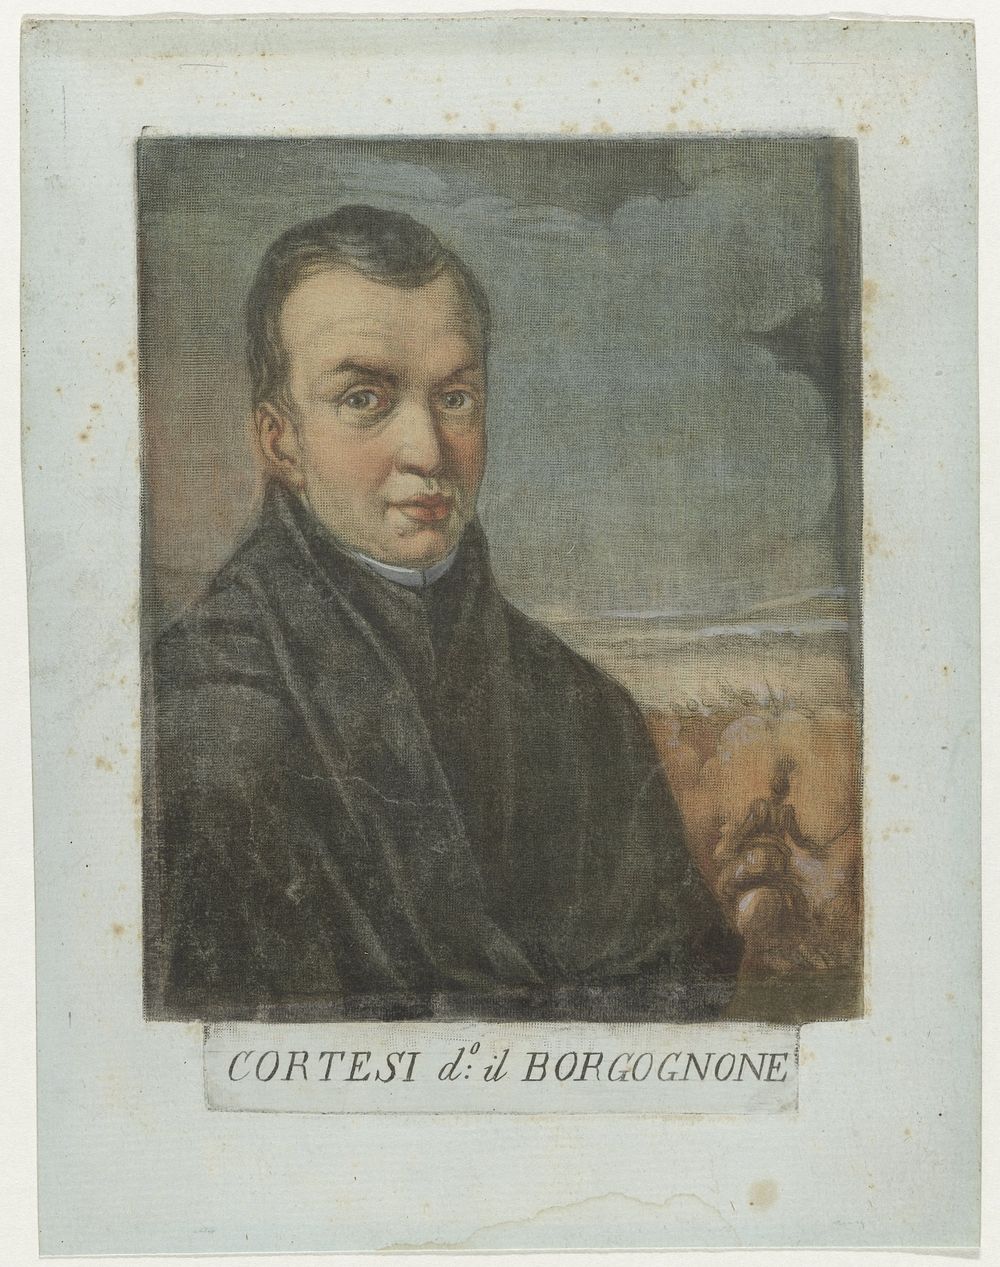 Portret van schilder Jacques Courtois (1789) by Carlo Lasinio and Jacques Courtois